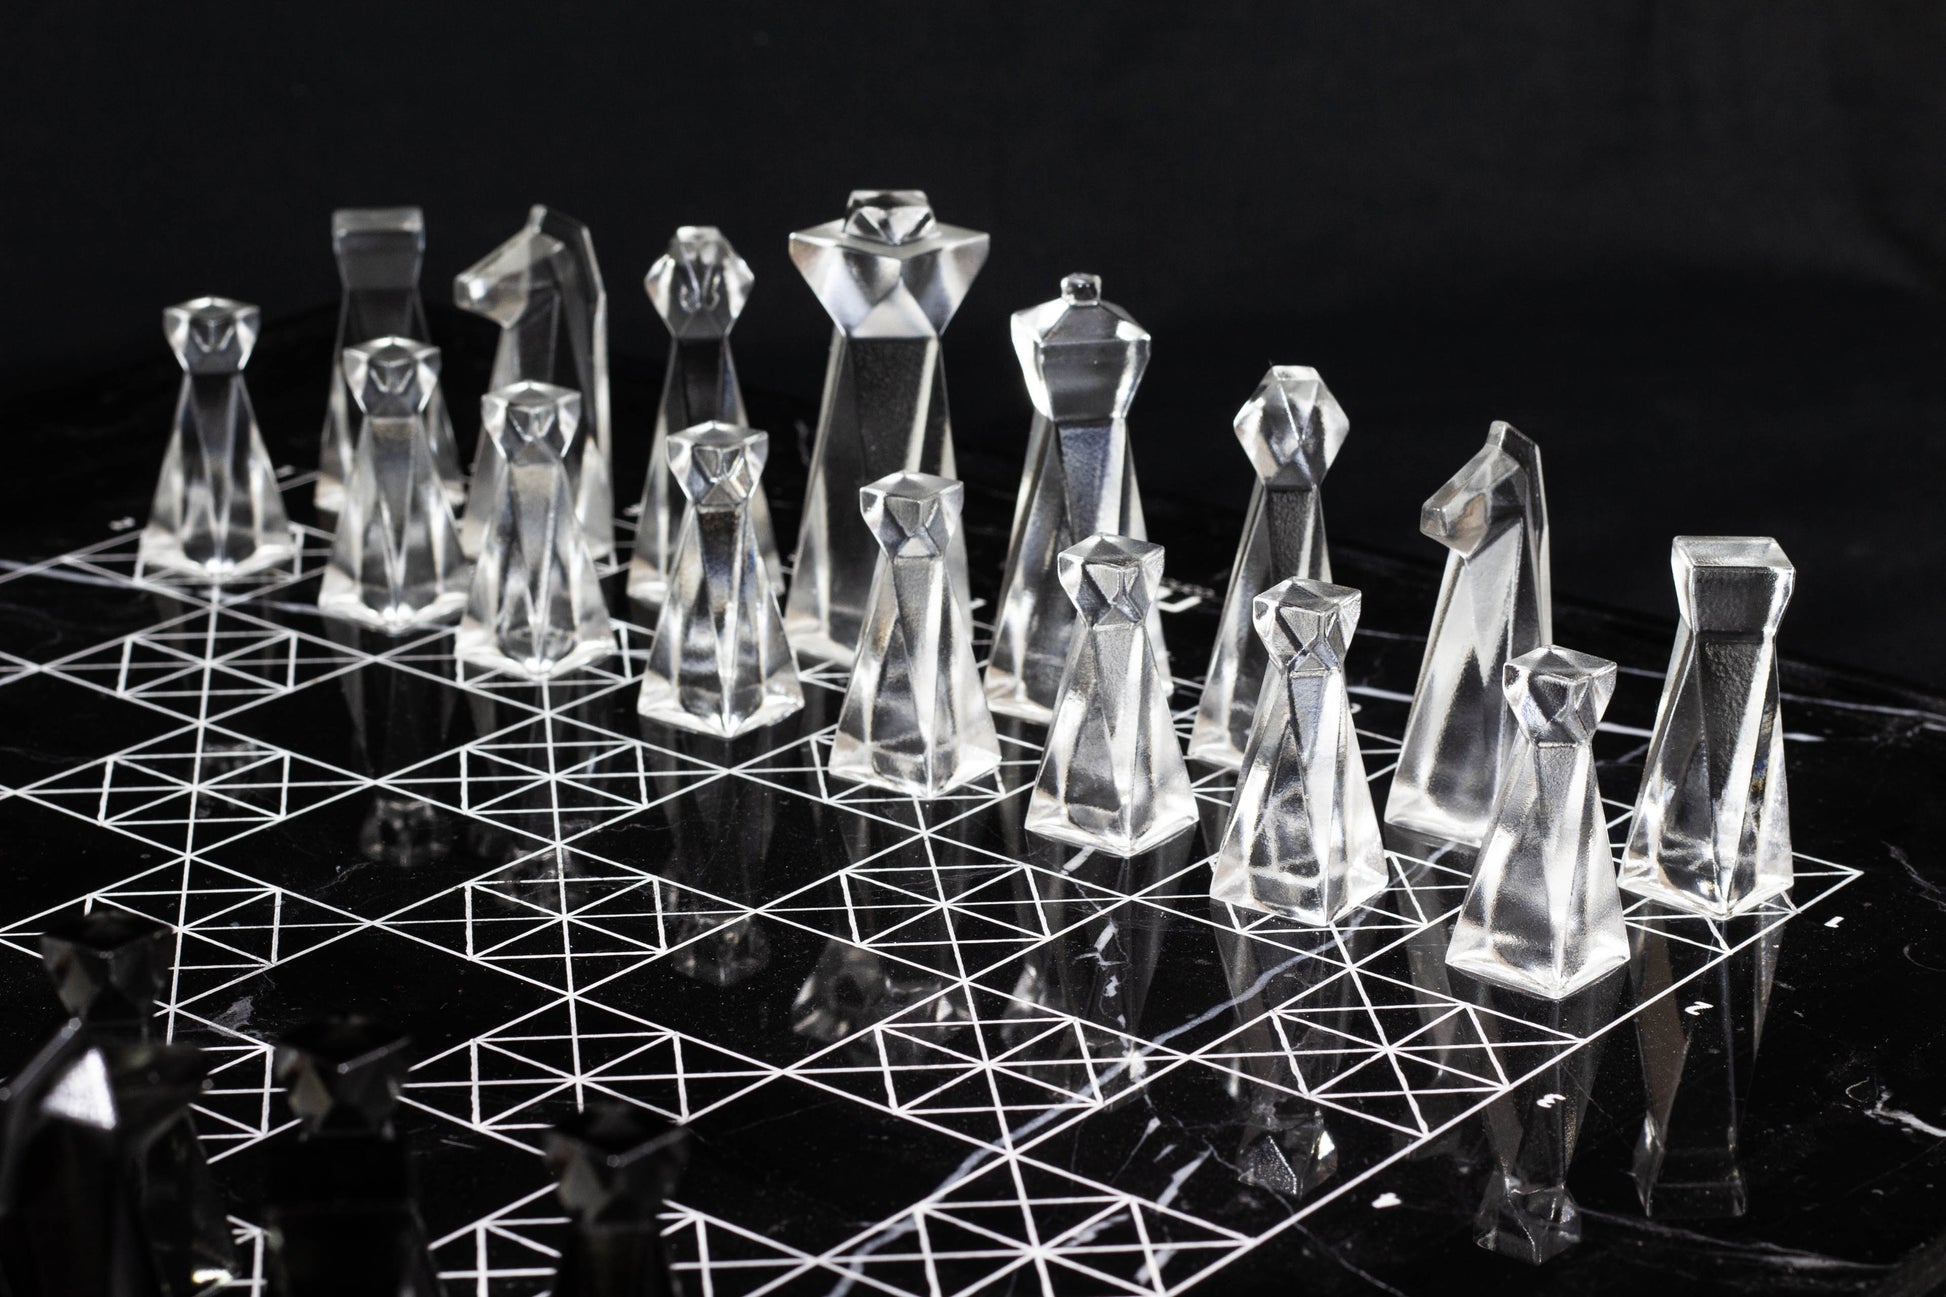 Luxury Chess Set - Modern Geometric Ultra Clear Resin Chess Set